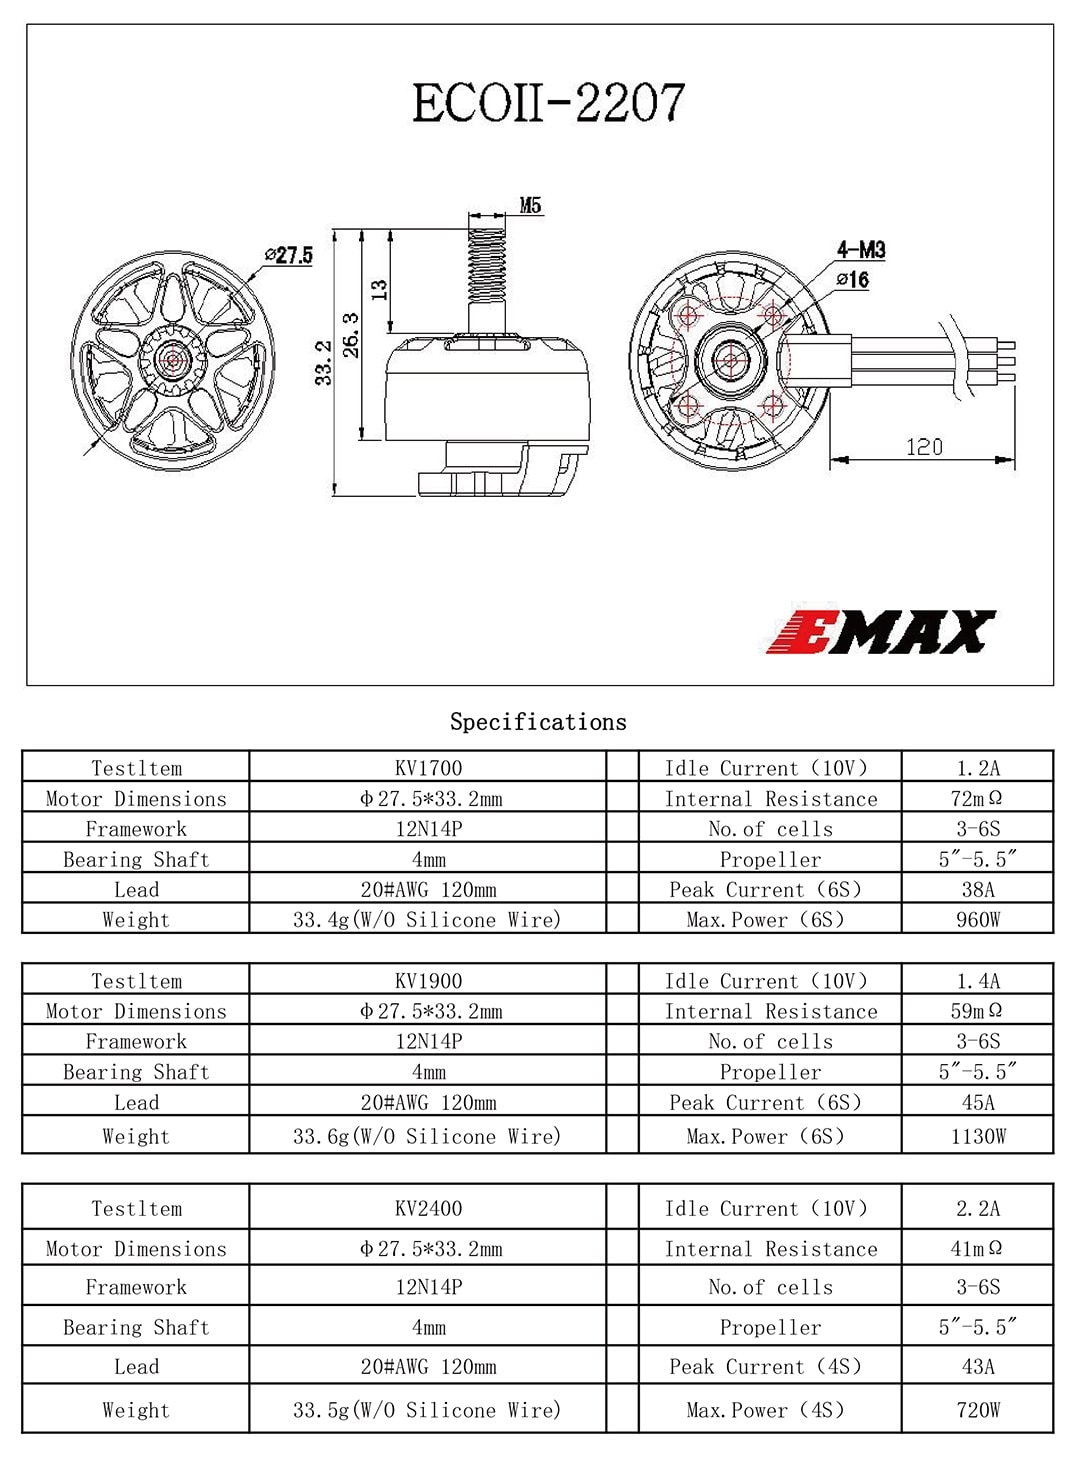 EMAX ECO II Series 2207 Motor